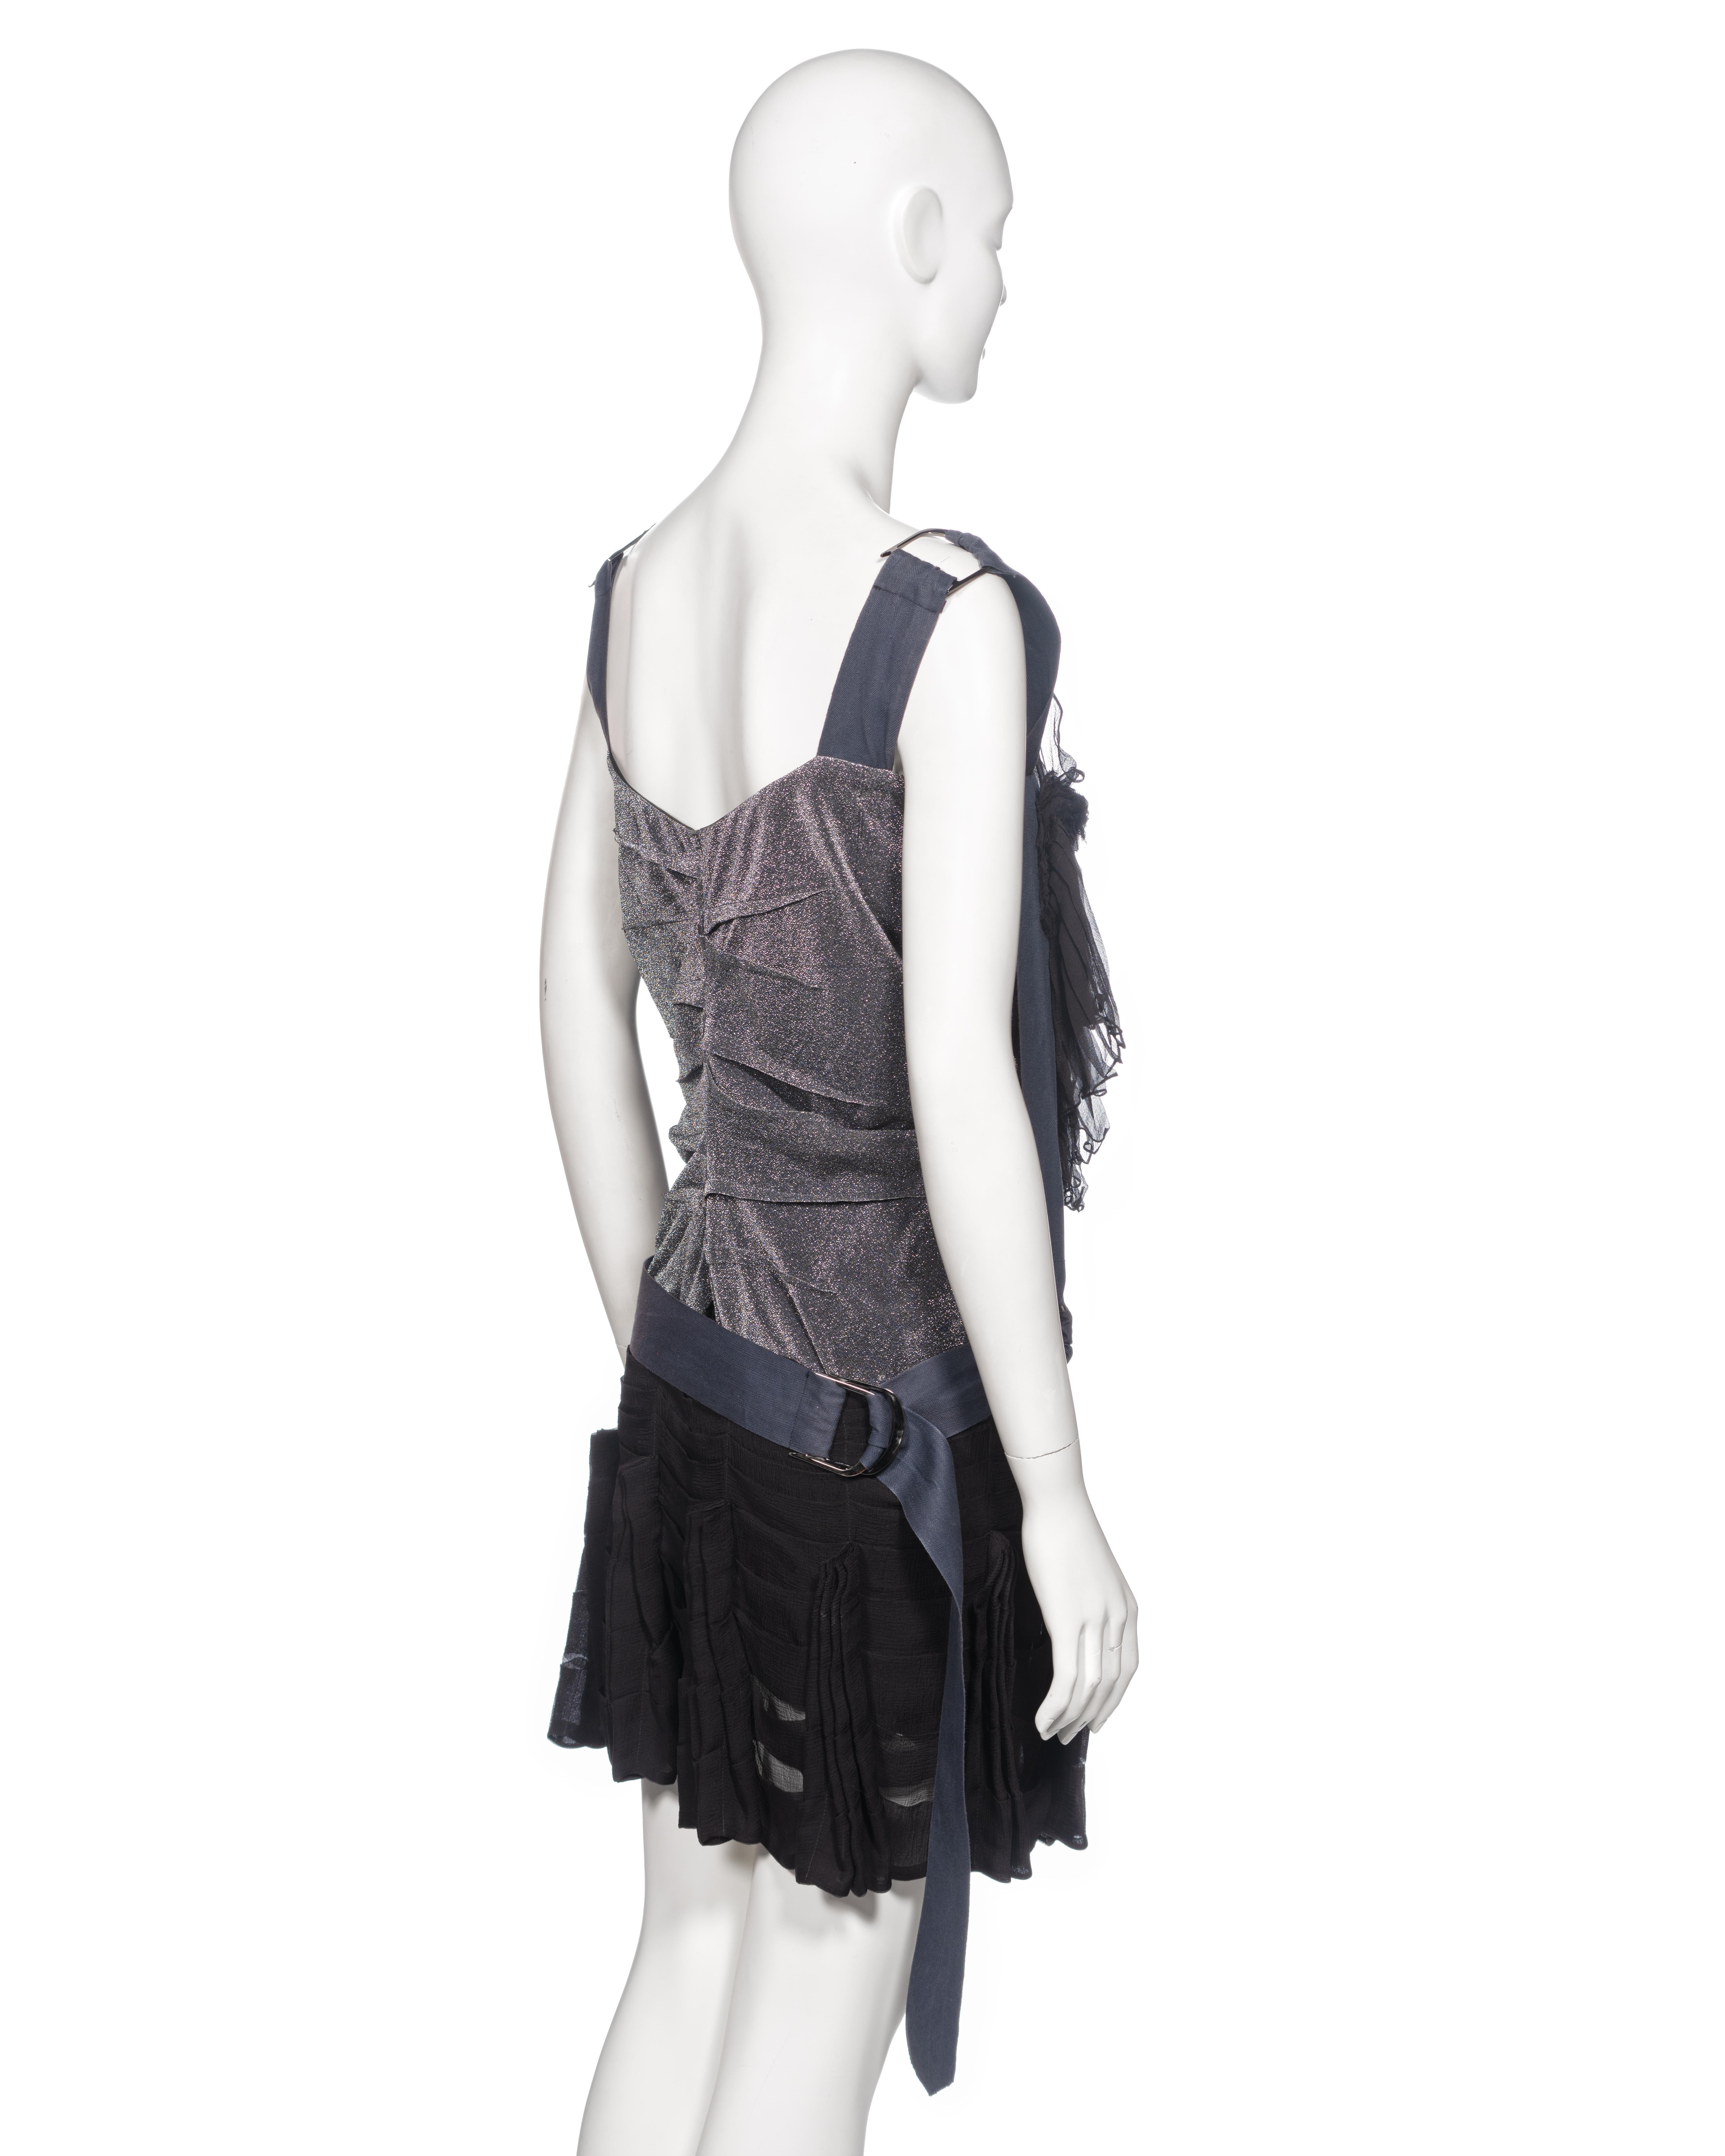 Christian Dior by John Galliano Silk Chiffon and Lurex Mini Dress, ss 2003 For Sale 4